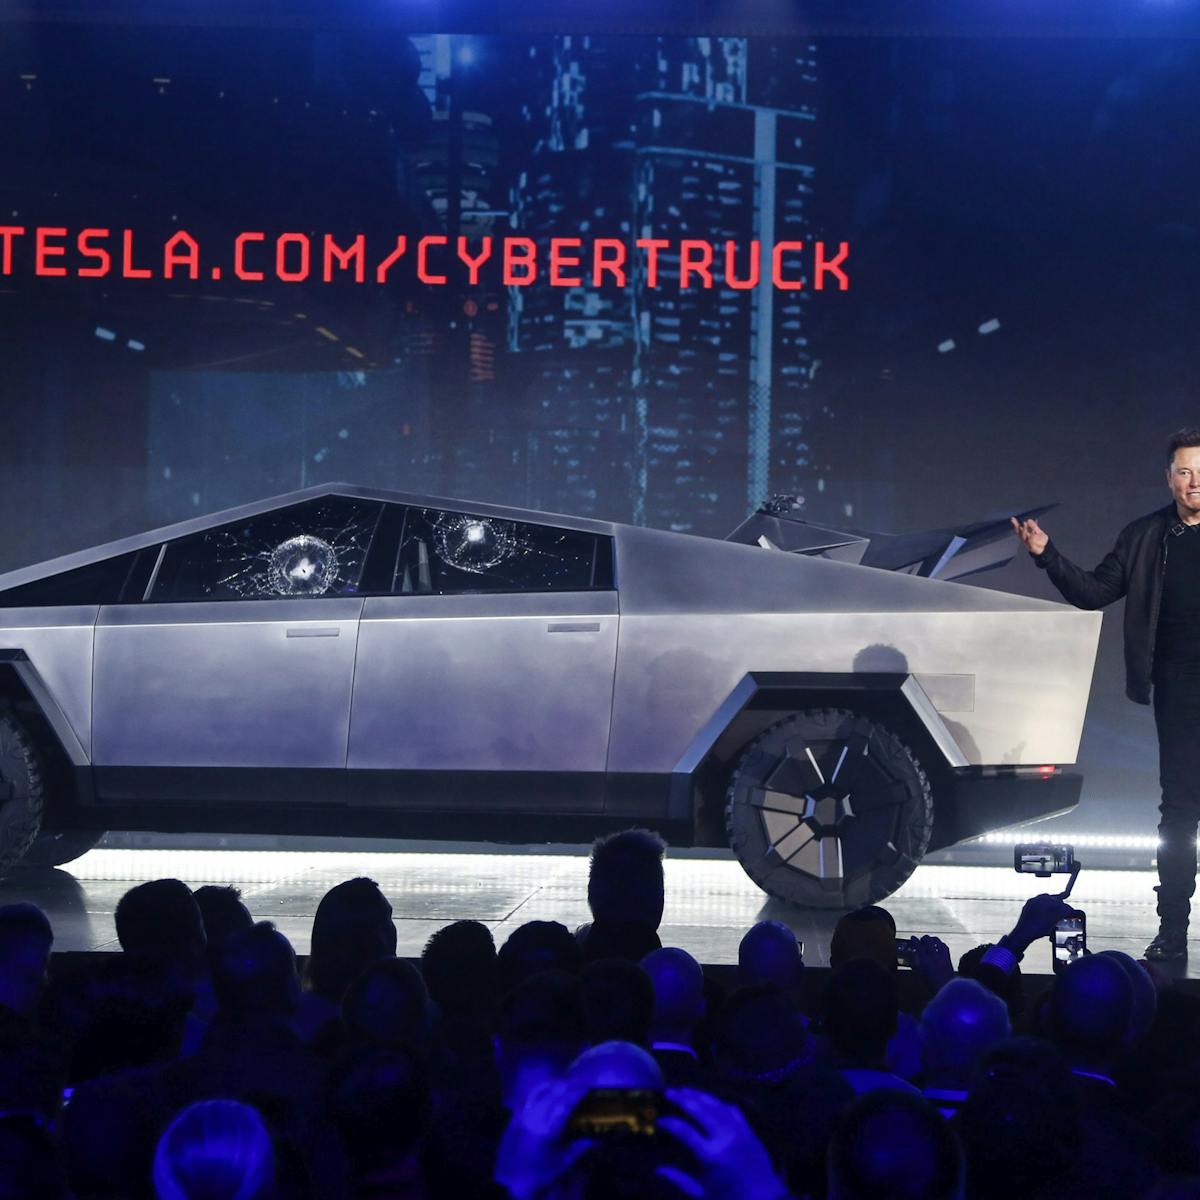 lovgivning investering regeringstid Love it or hate it, Tesla's Cybertruck is revolutionary